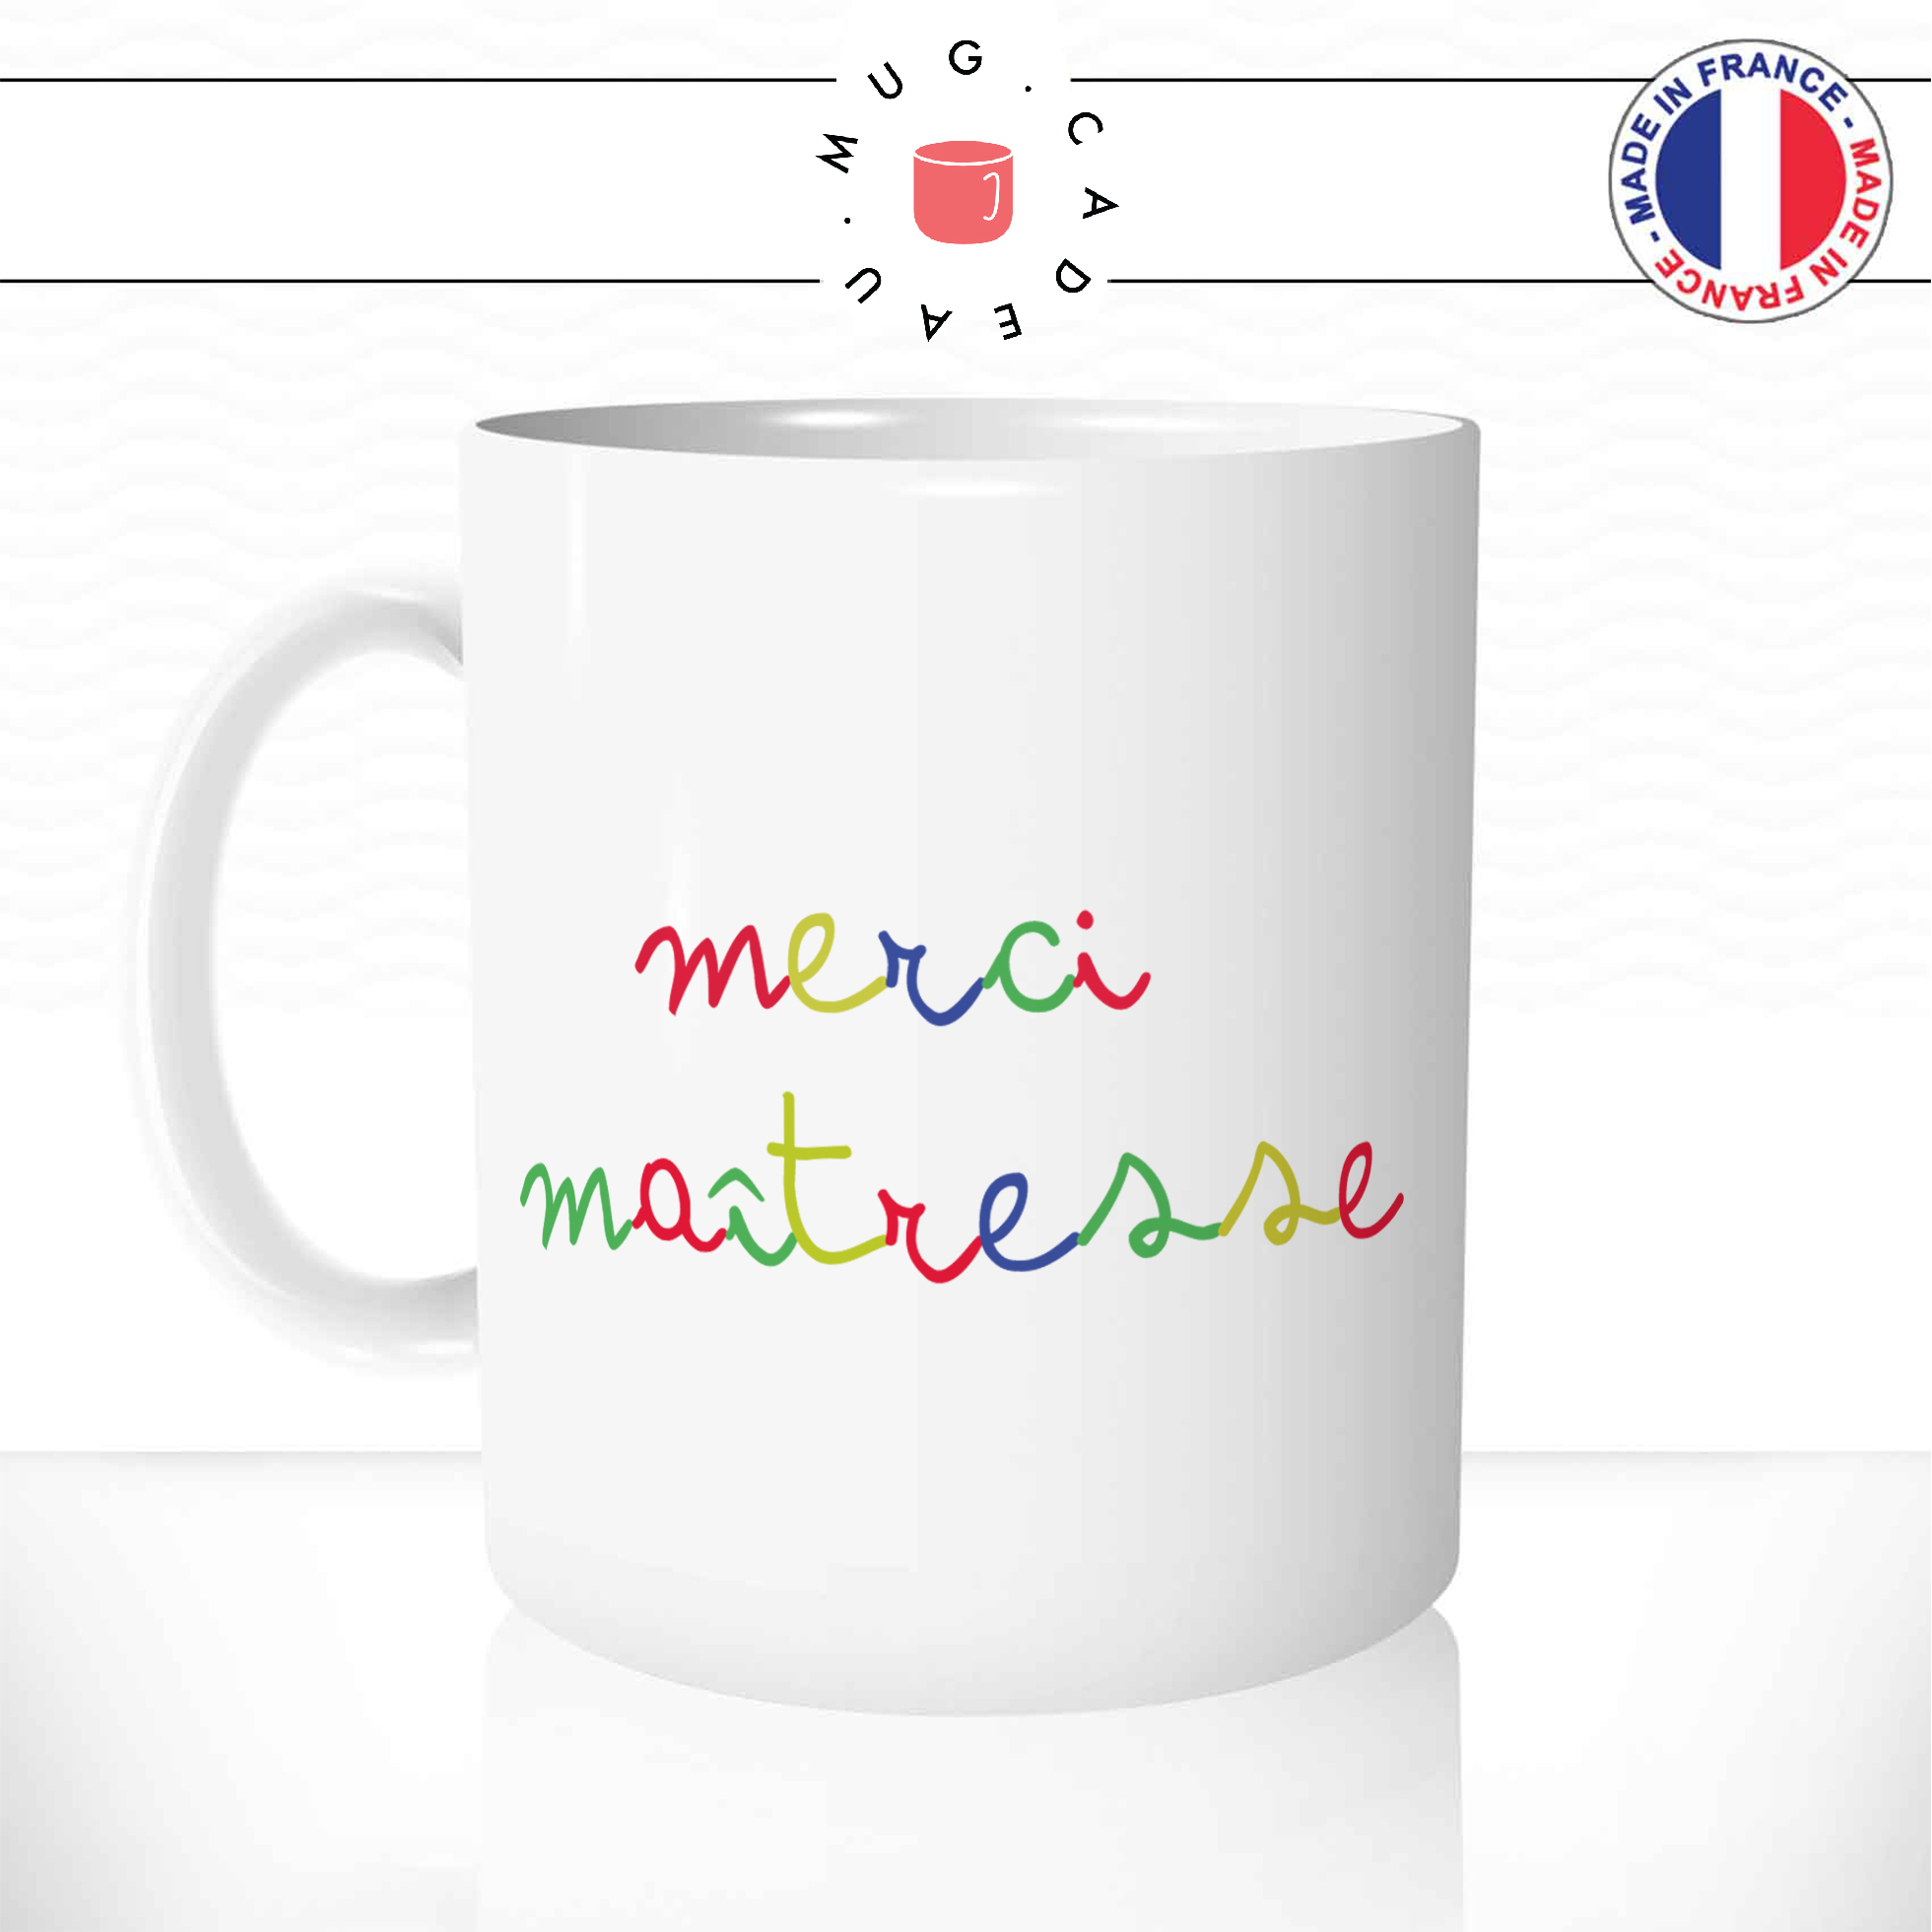 mug-tasse-ref4-fin-annee-scolaire-merci-maitresse-couleurs-cafe-the-mugs-tasses-personnalise-anse-gauche